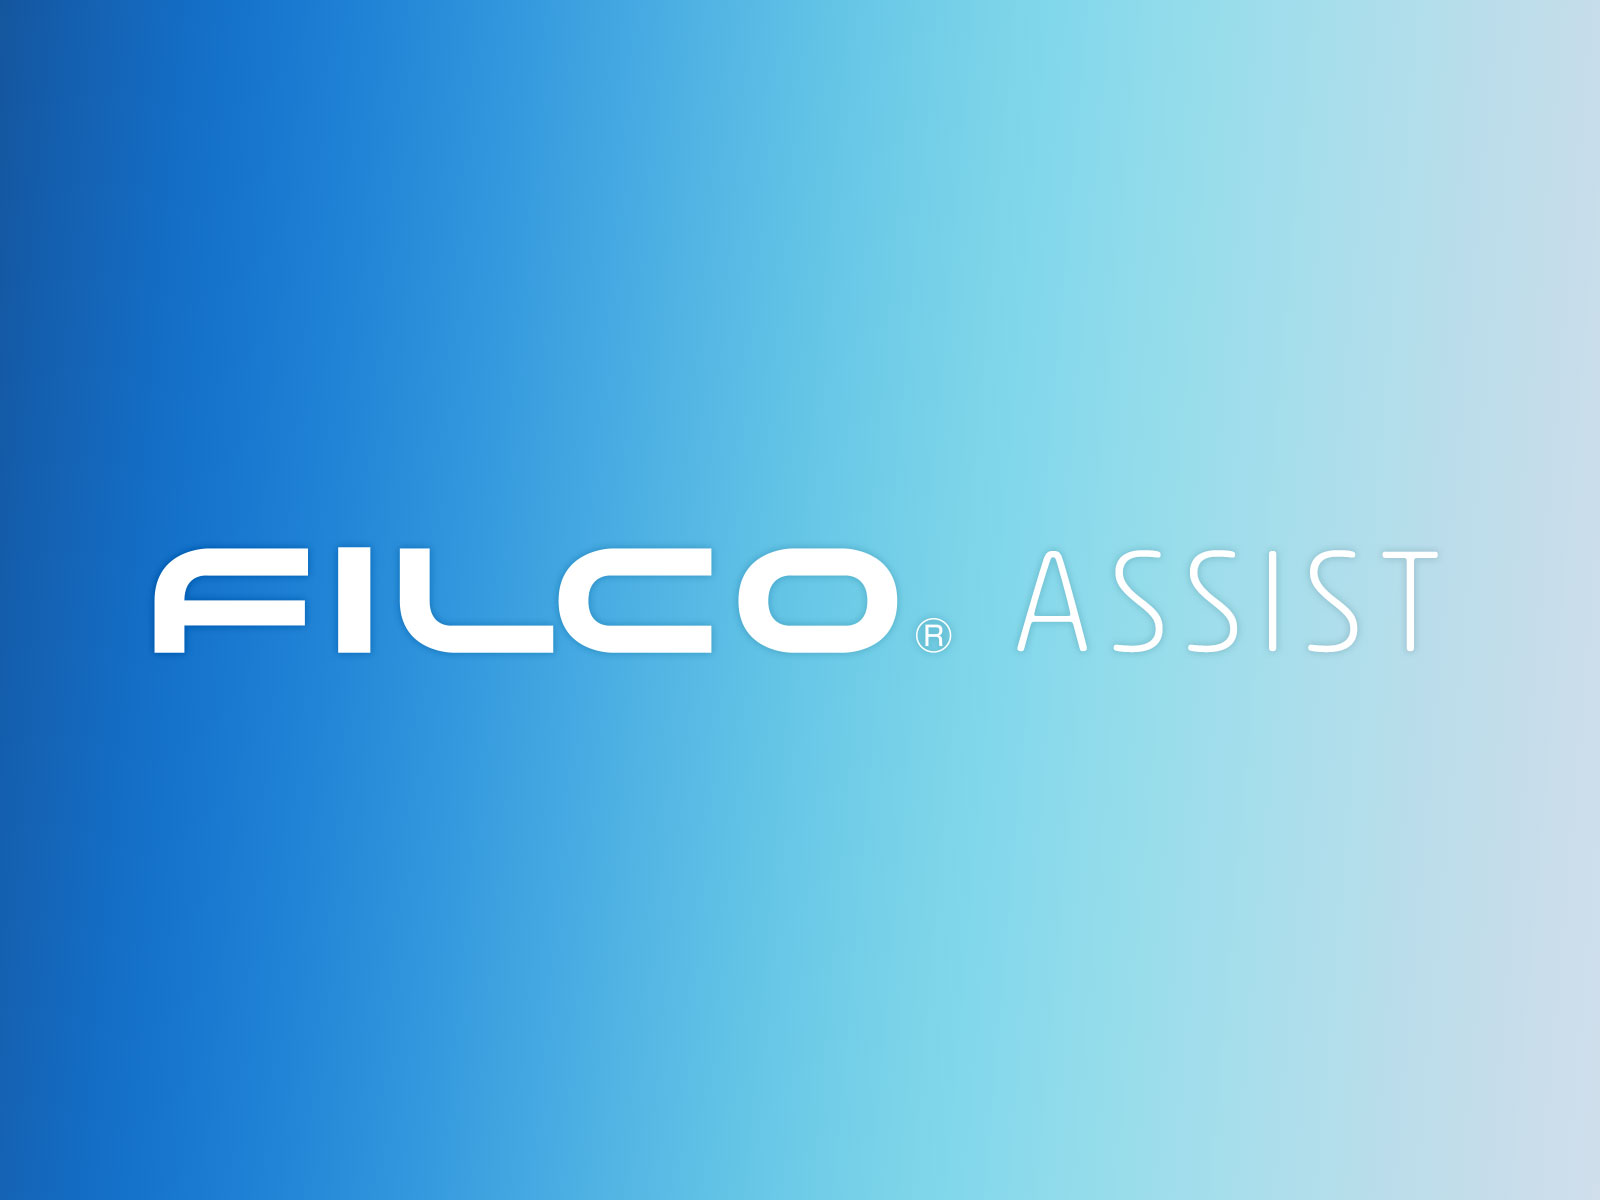 FILCO Assist